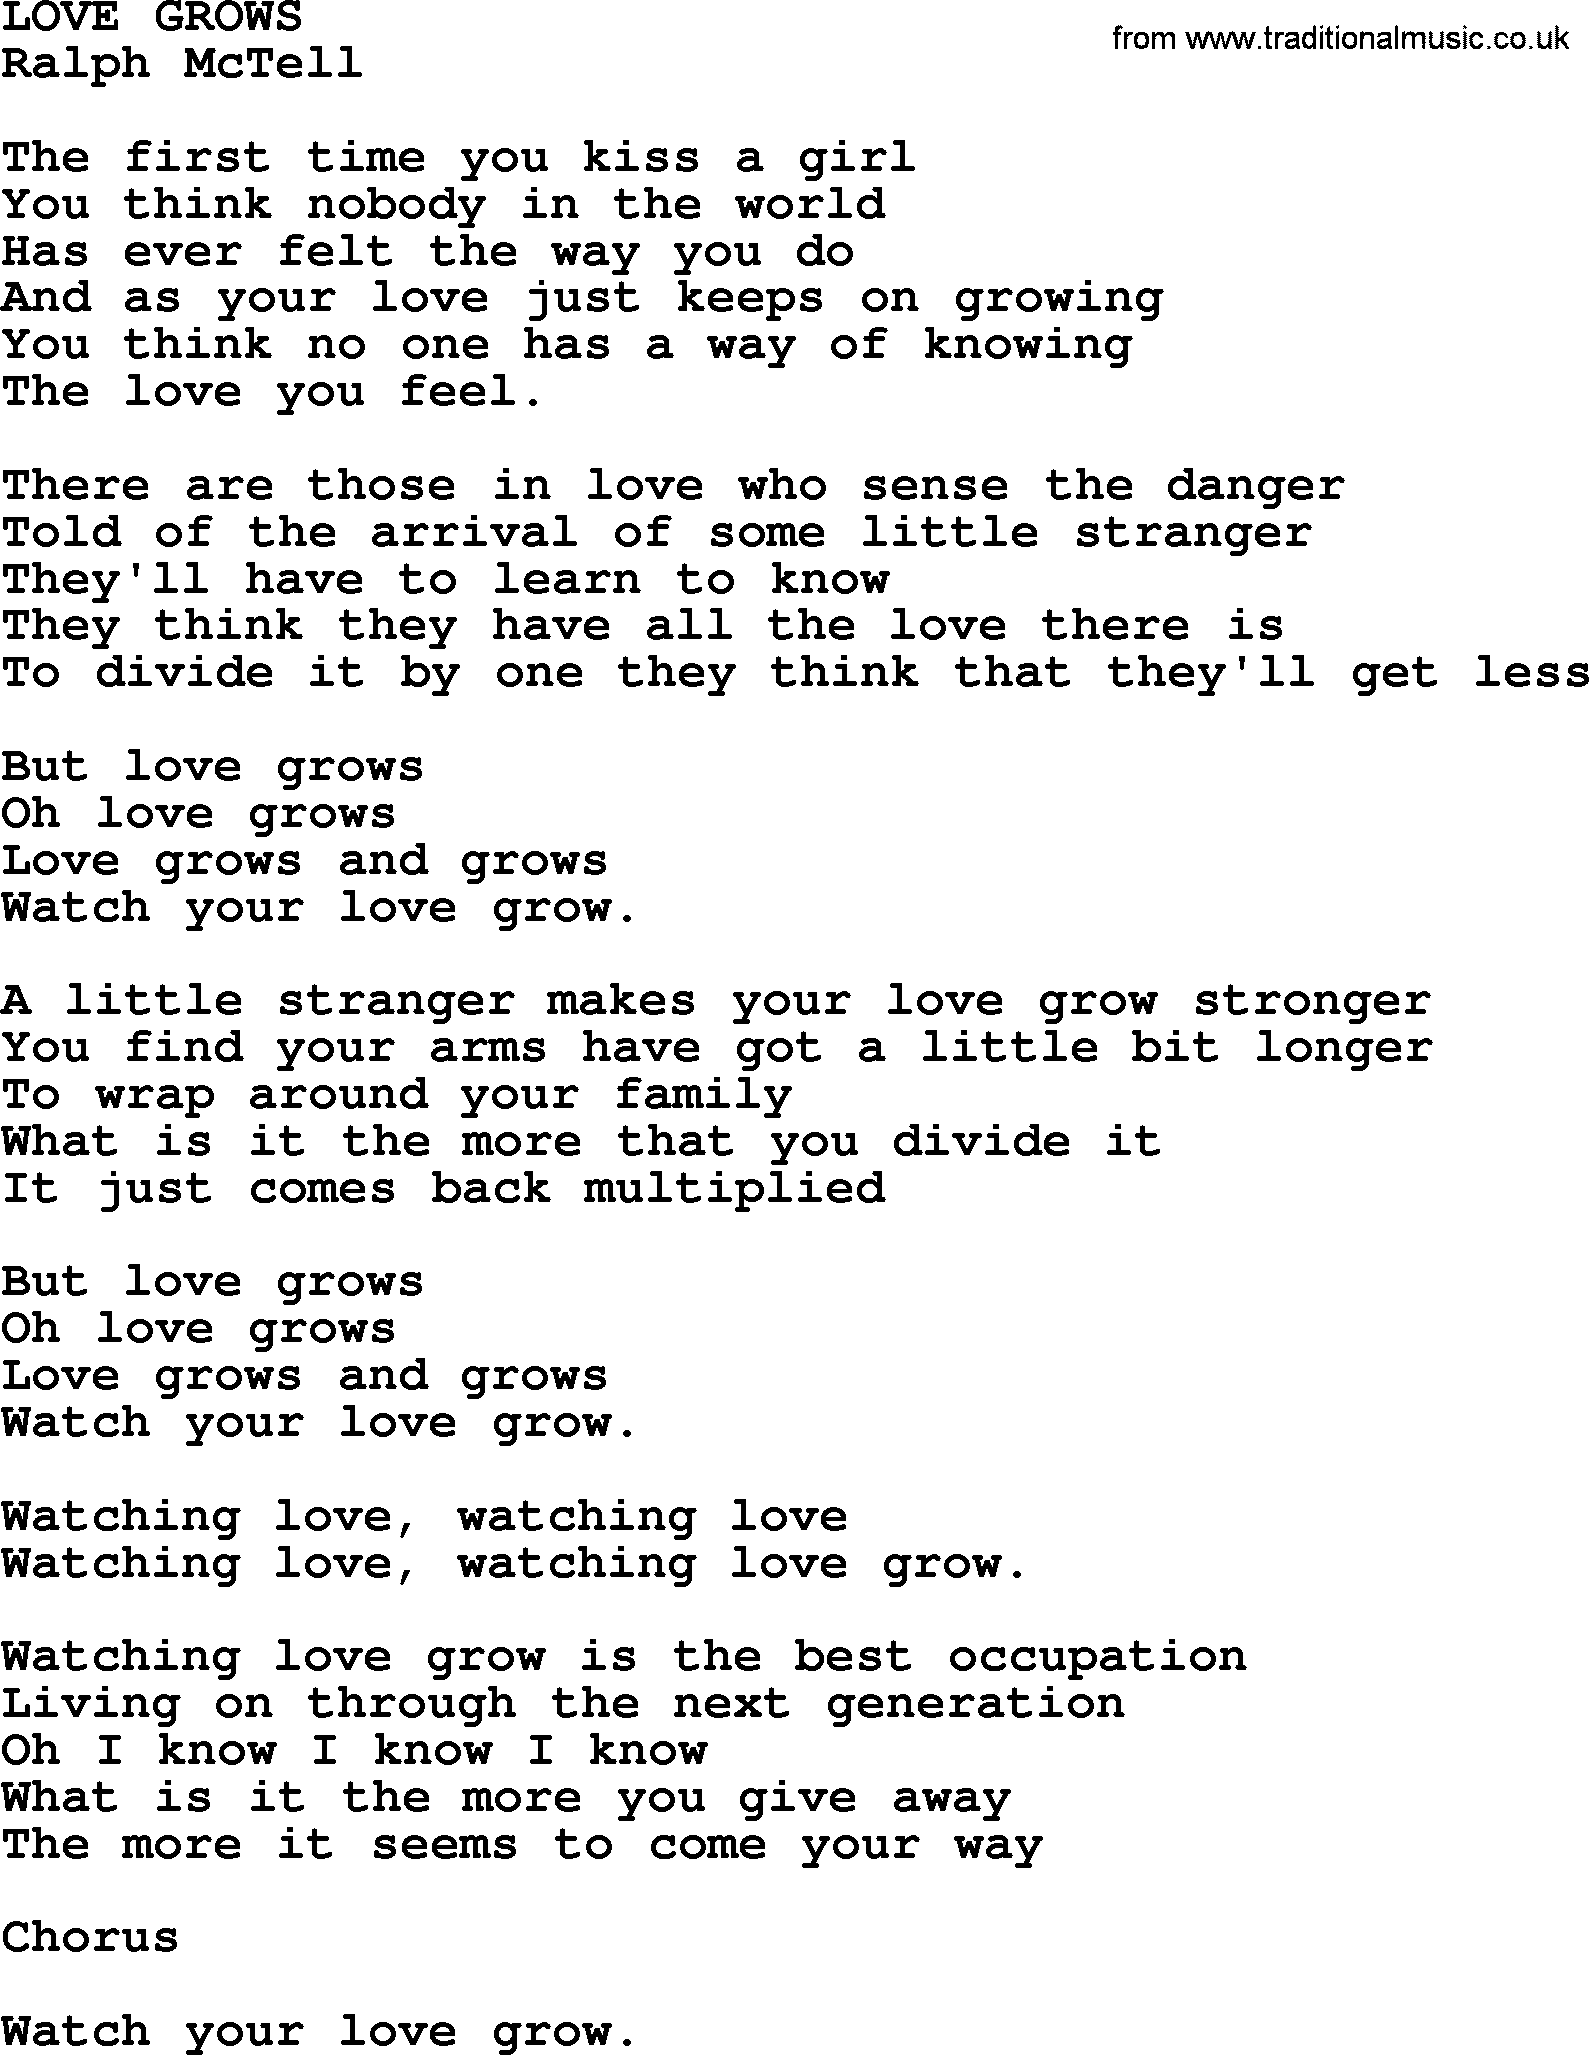 Ralph McTell Song: Love Grows, lyrics